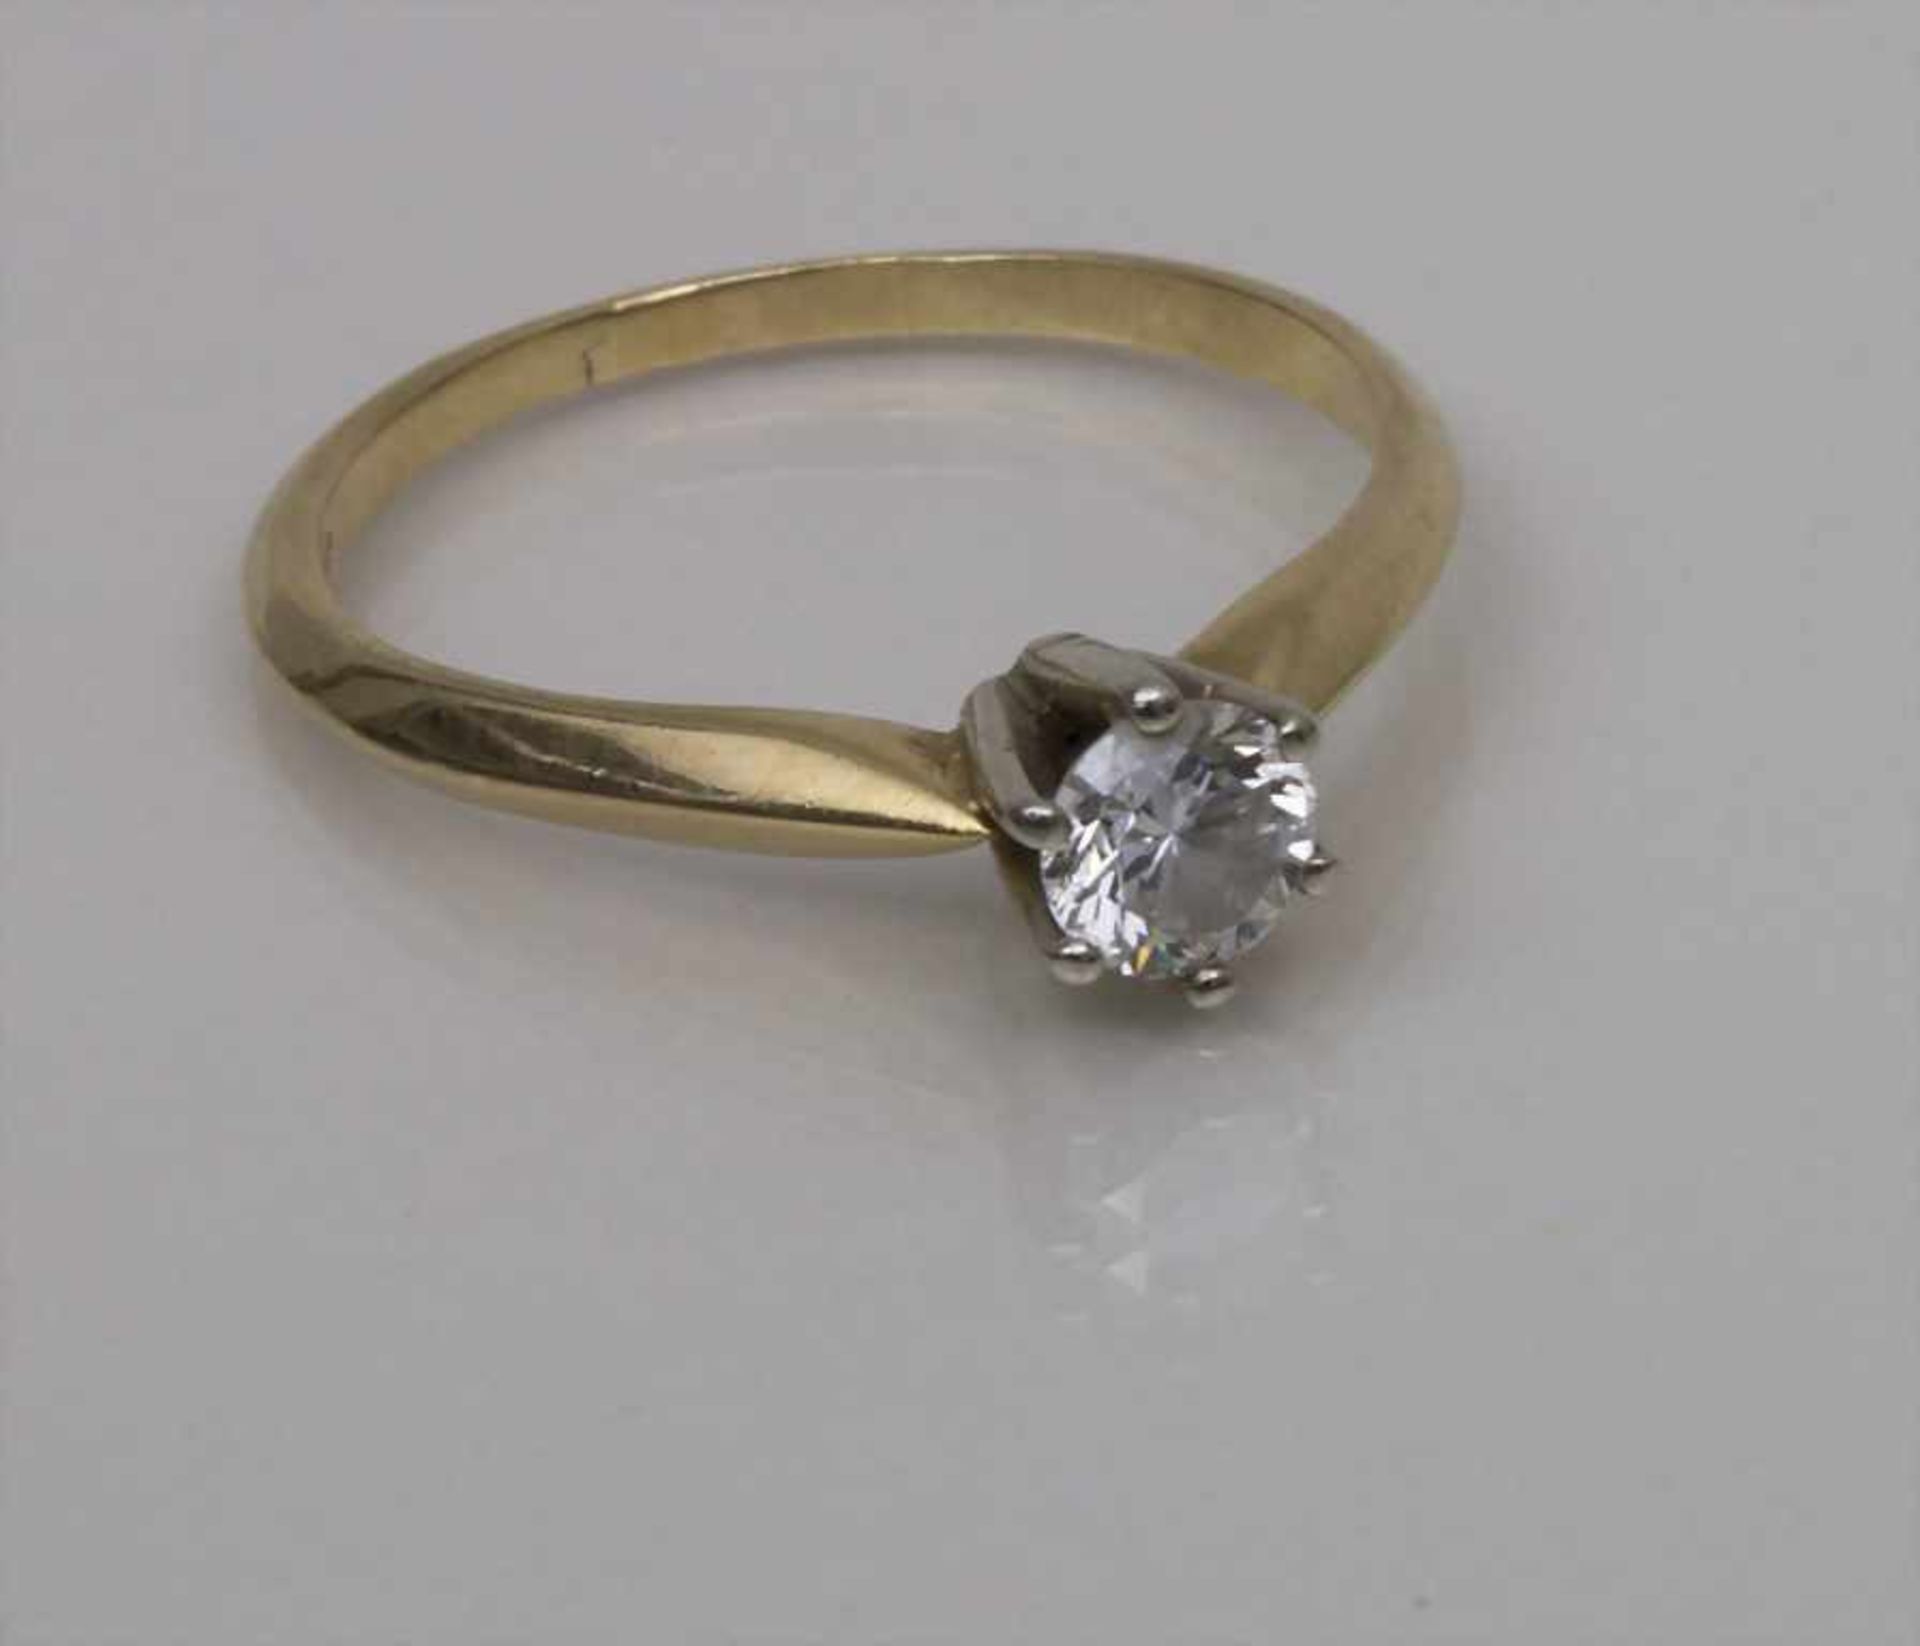 Solitaire-Damenring / A solitaire ladies ring Material: Gelbgold 750/000 18 Kt, 1 Solitär Diamant,